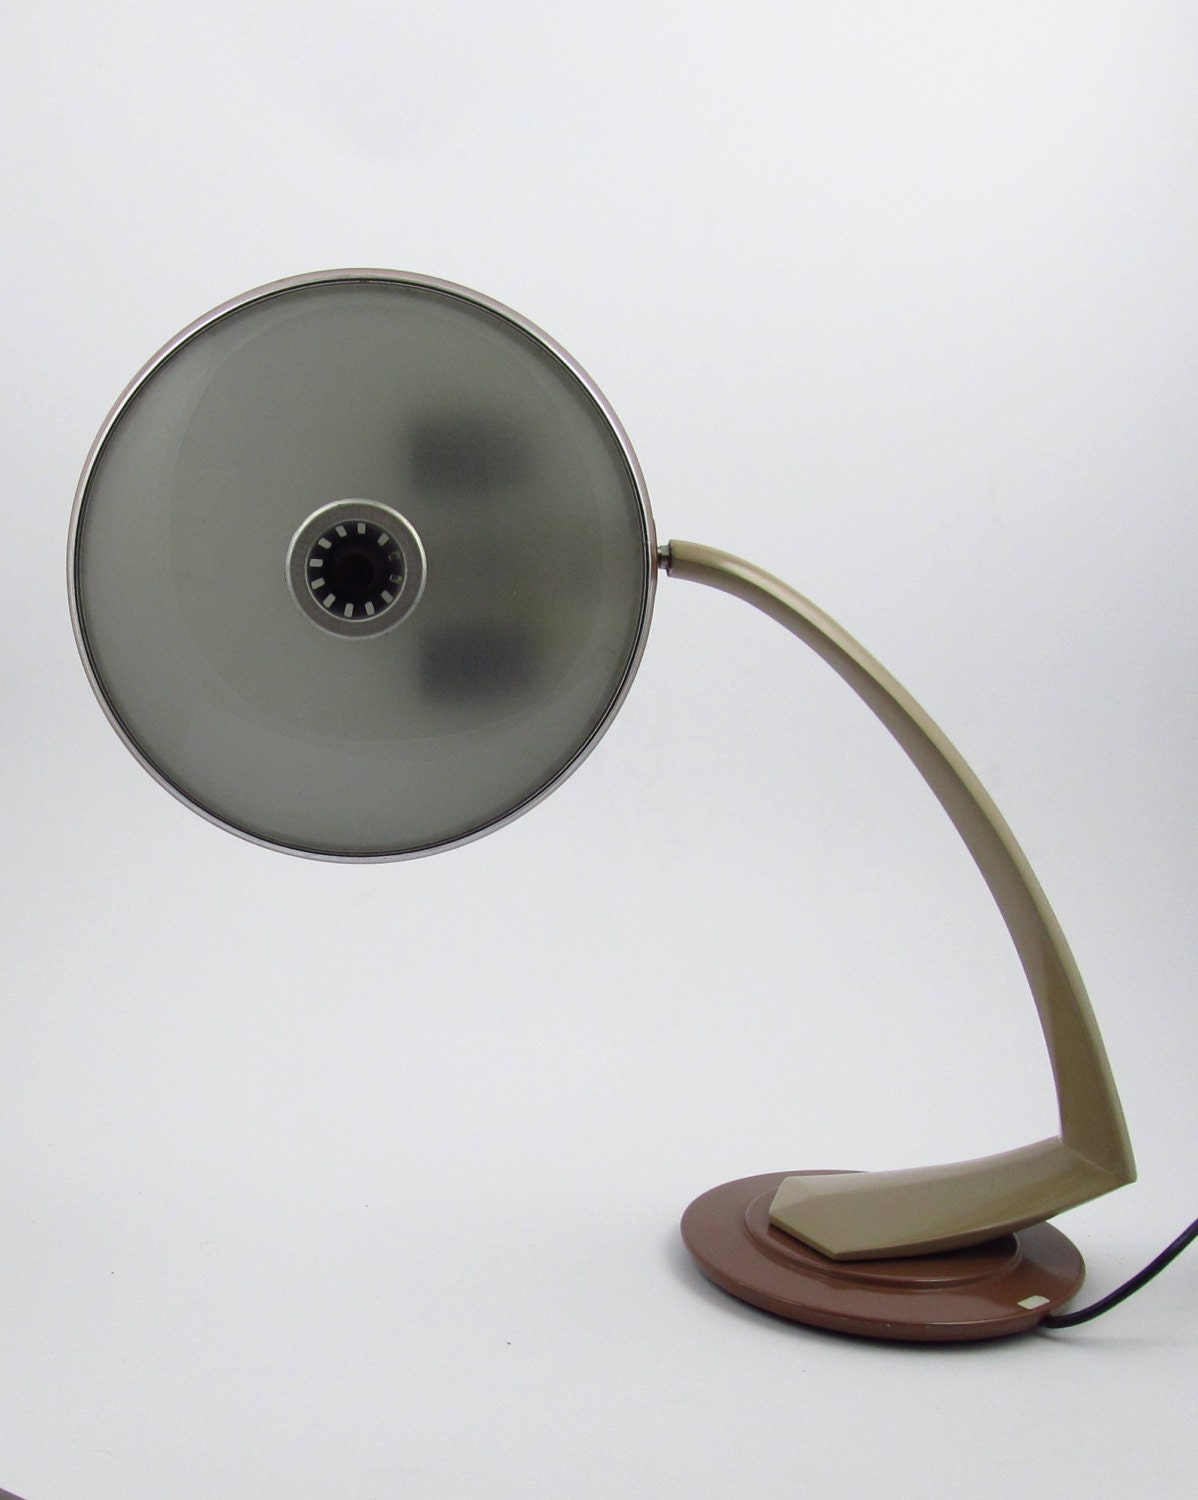 FASE BOOMERANG 2000 Zware vintage Fase Lamp uit Madrid ontworpen eind jaren 60